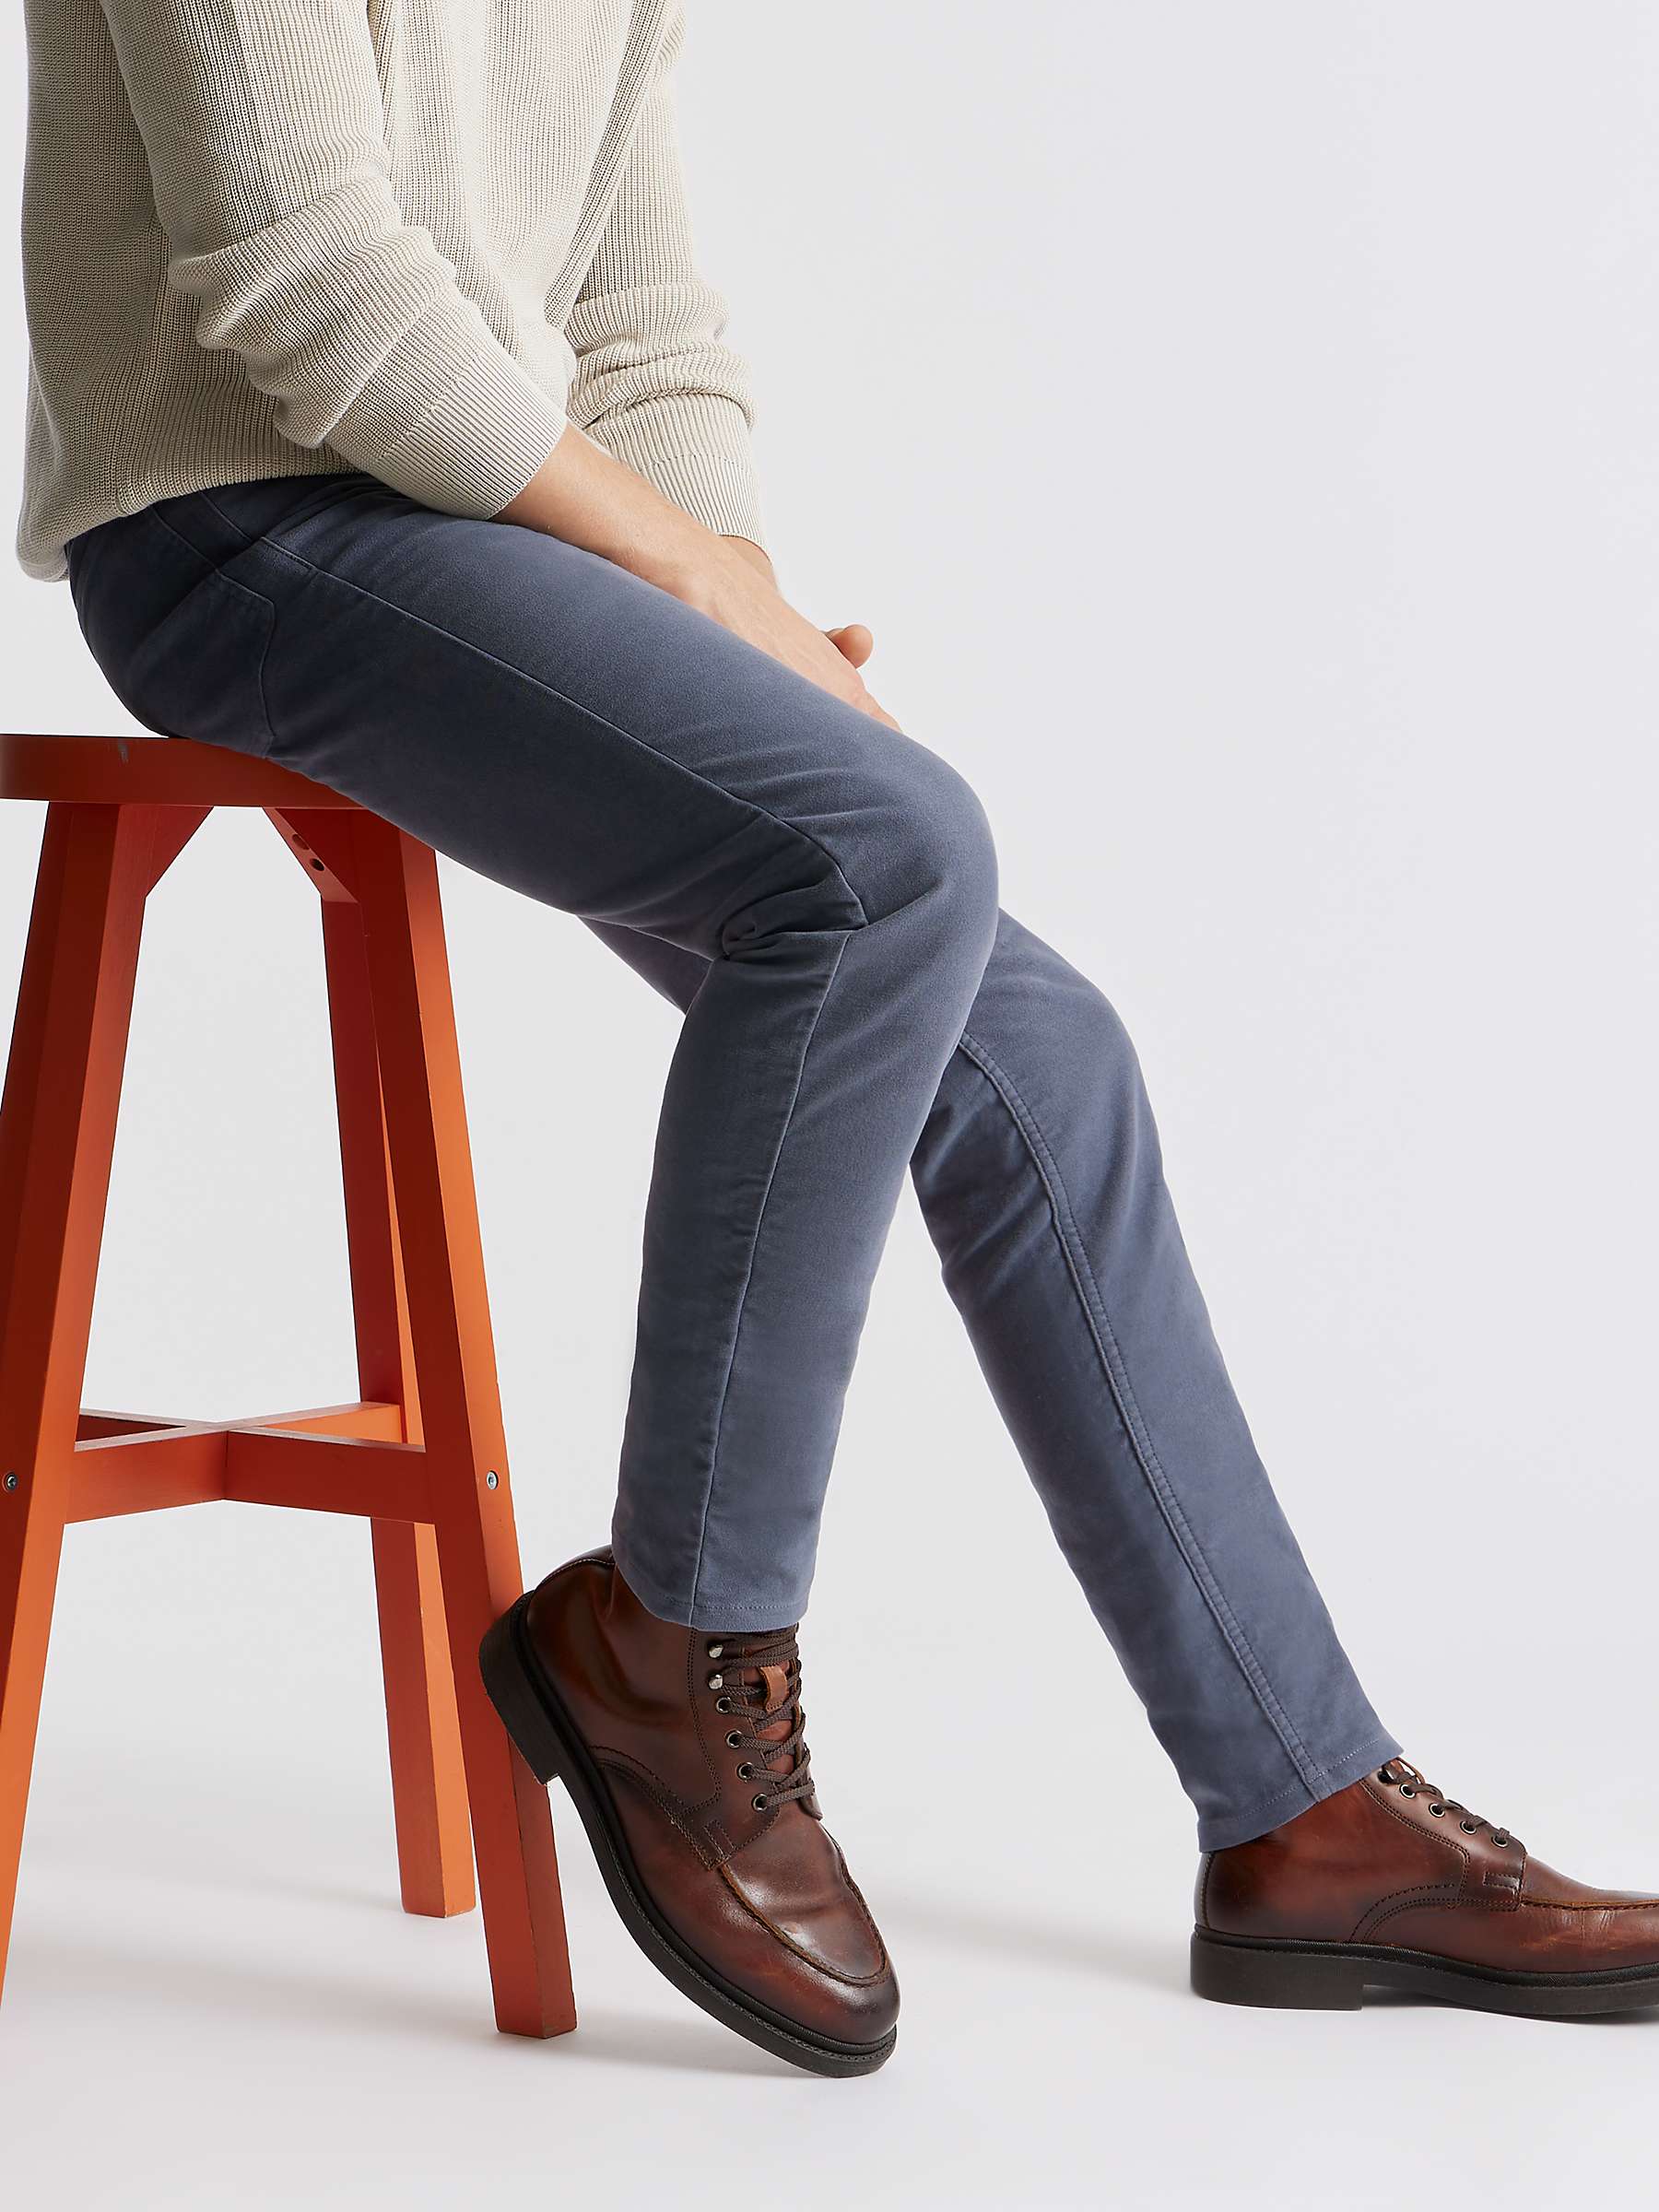 Buy SPOKE Moleskin Fives Broad Thigh Trousers Online at johnlewis.com